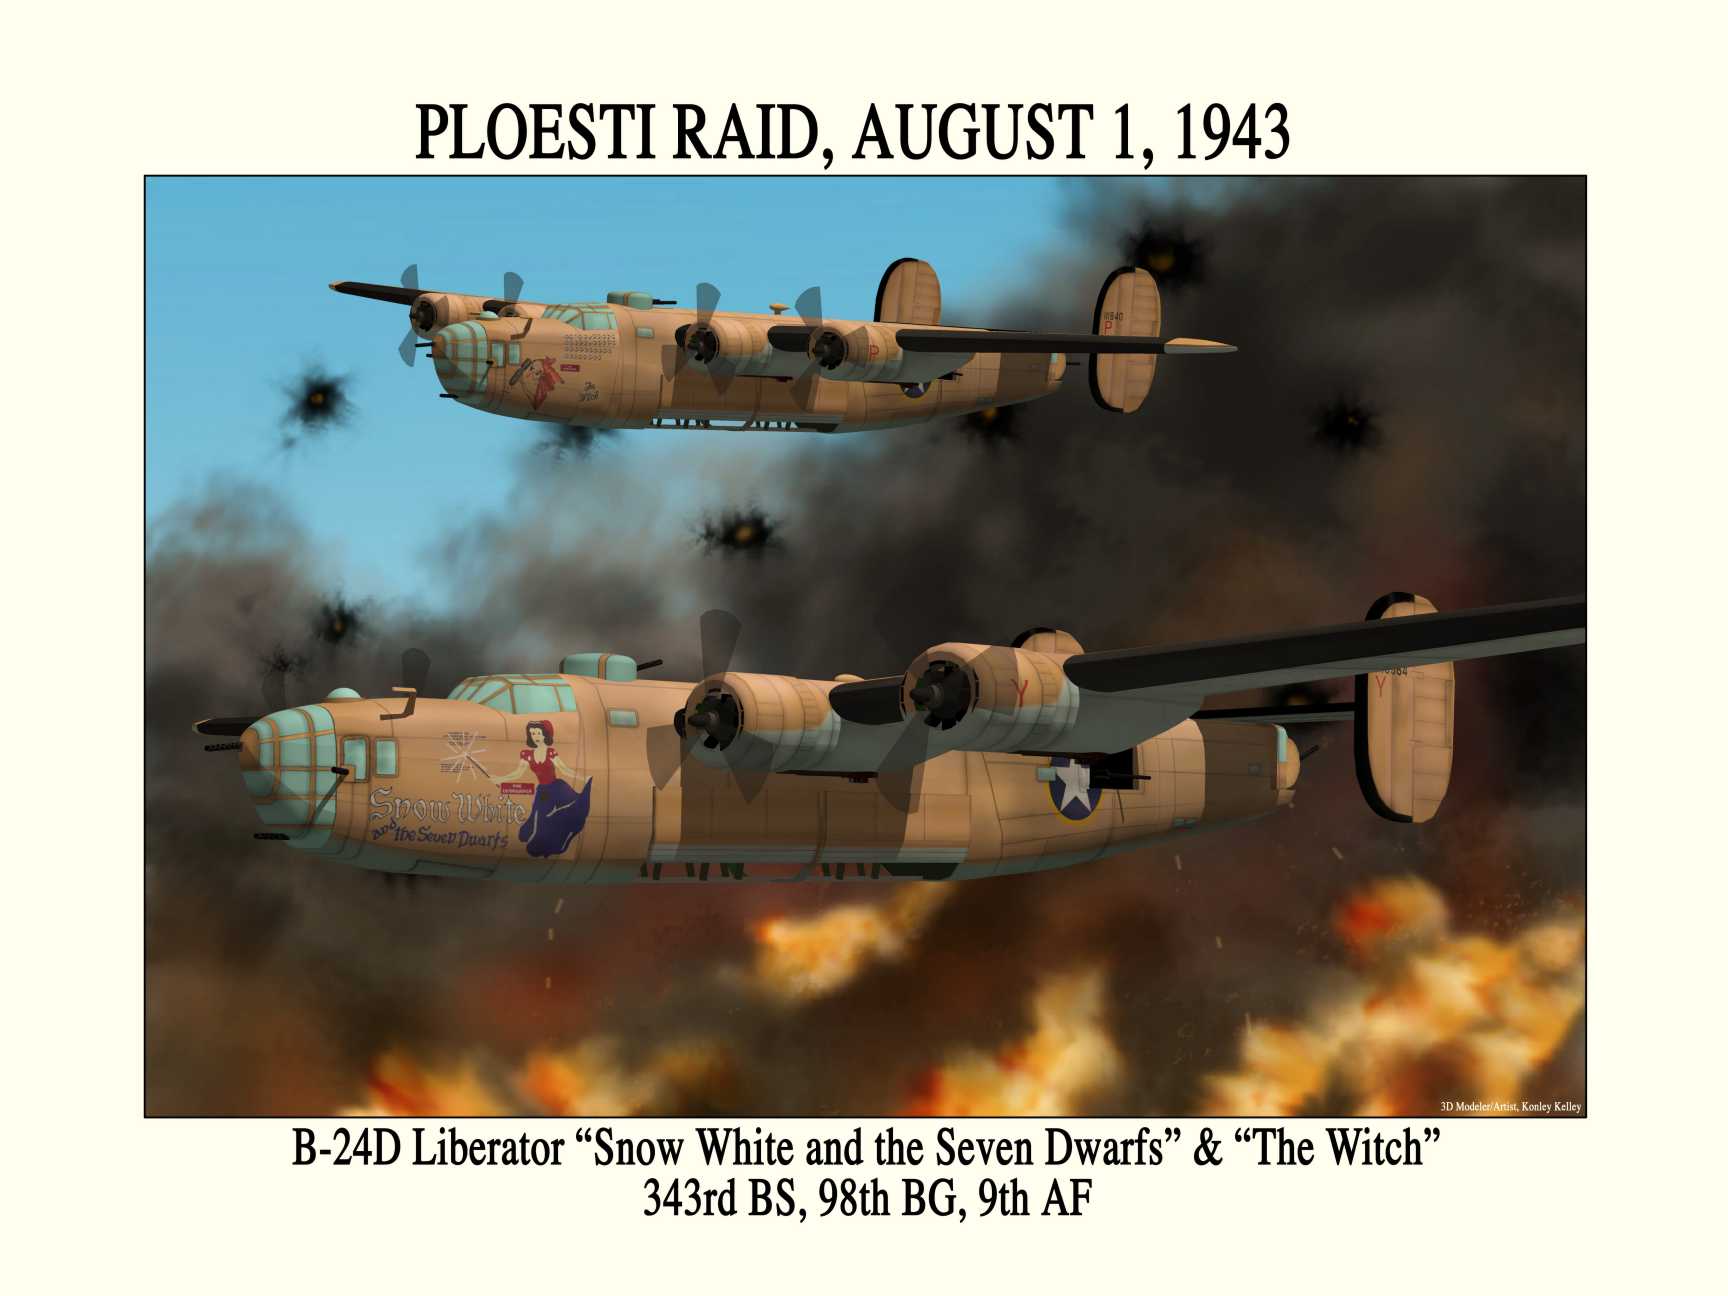 Konley Kelly B-24D over Ploesti, Poster